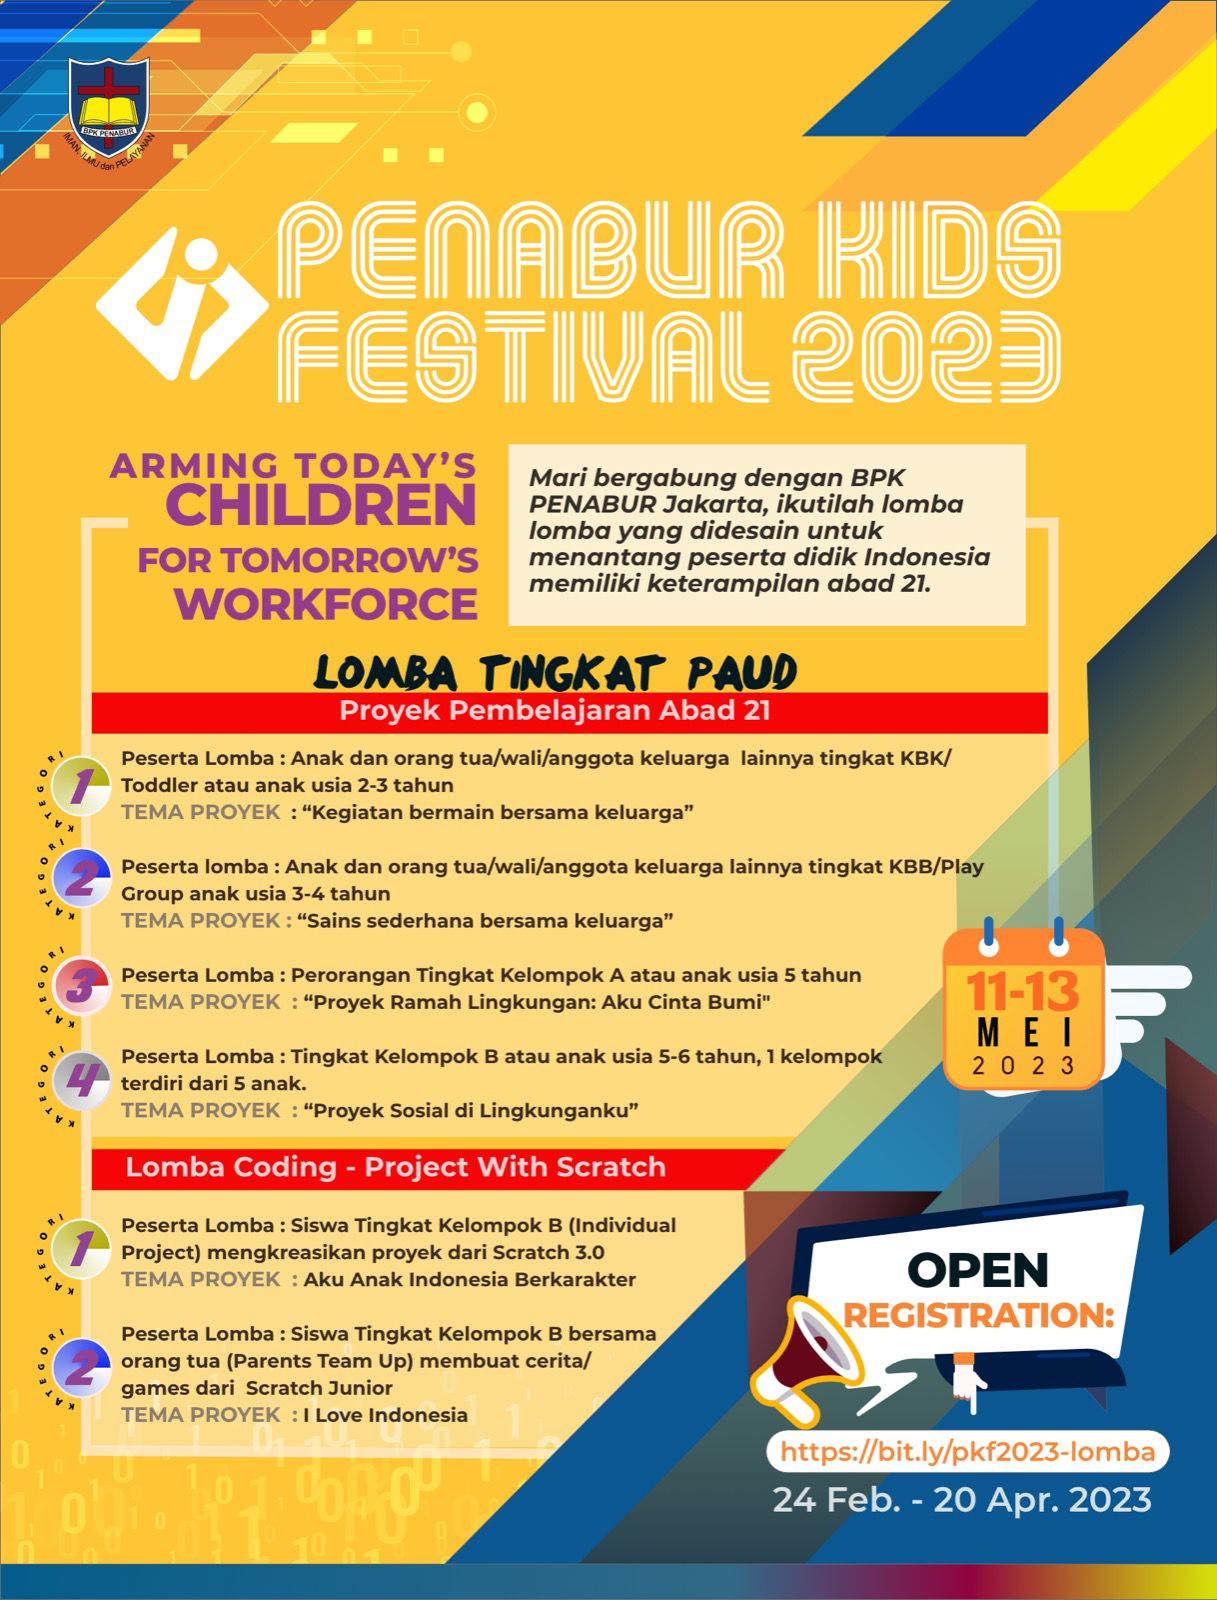 PENABUR Kids Festival 2023 "Arming Today's Children for Tomorrow's Workforce" Tingkat PAUD